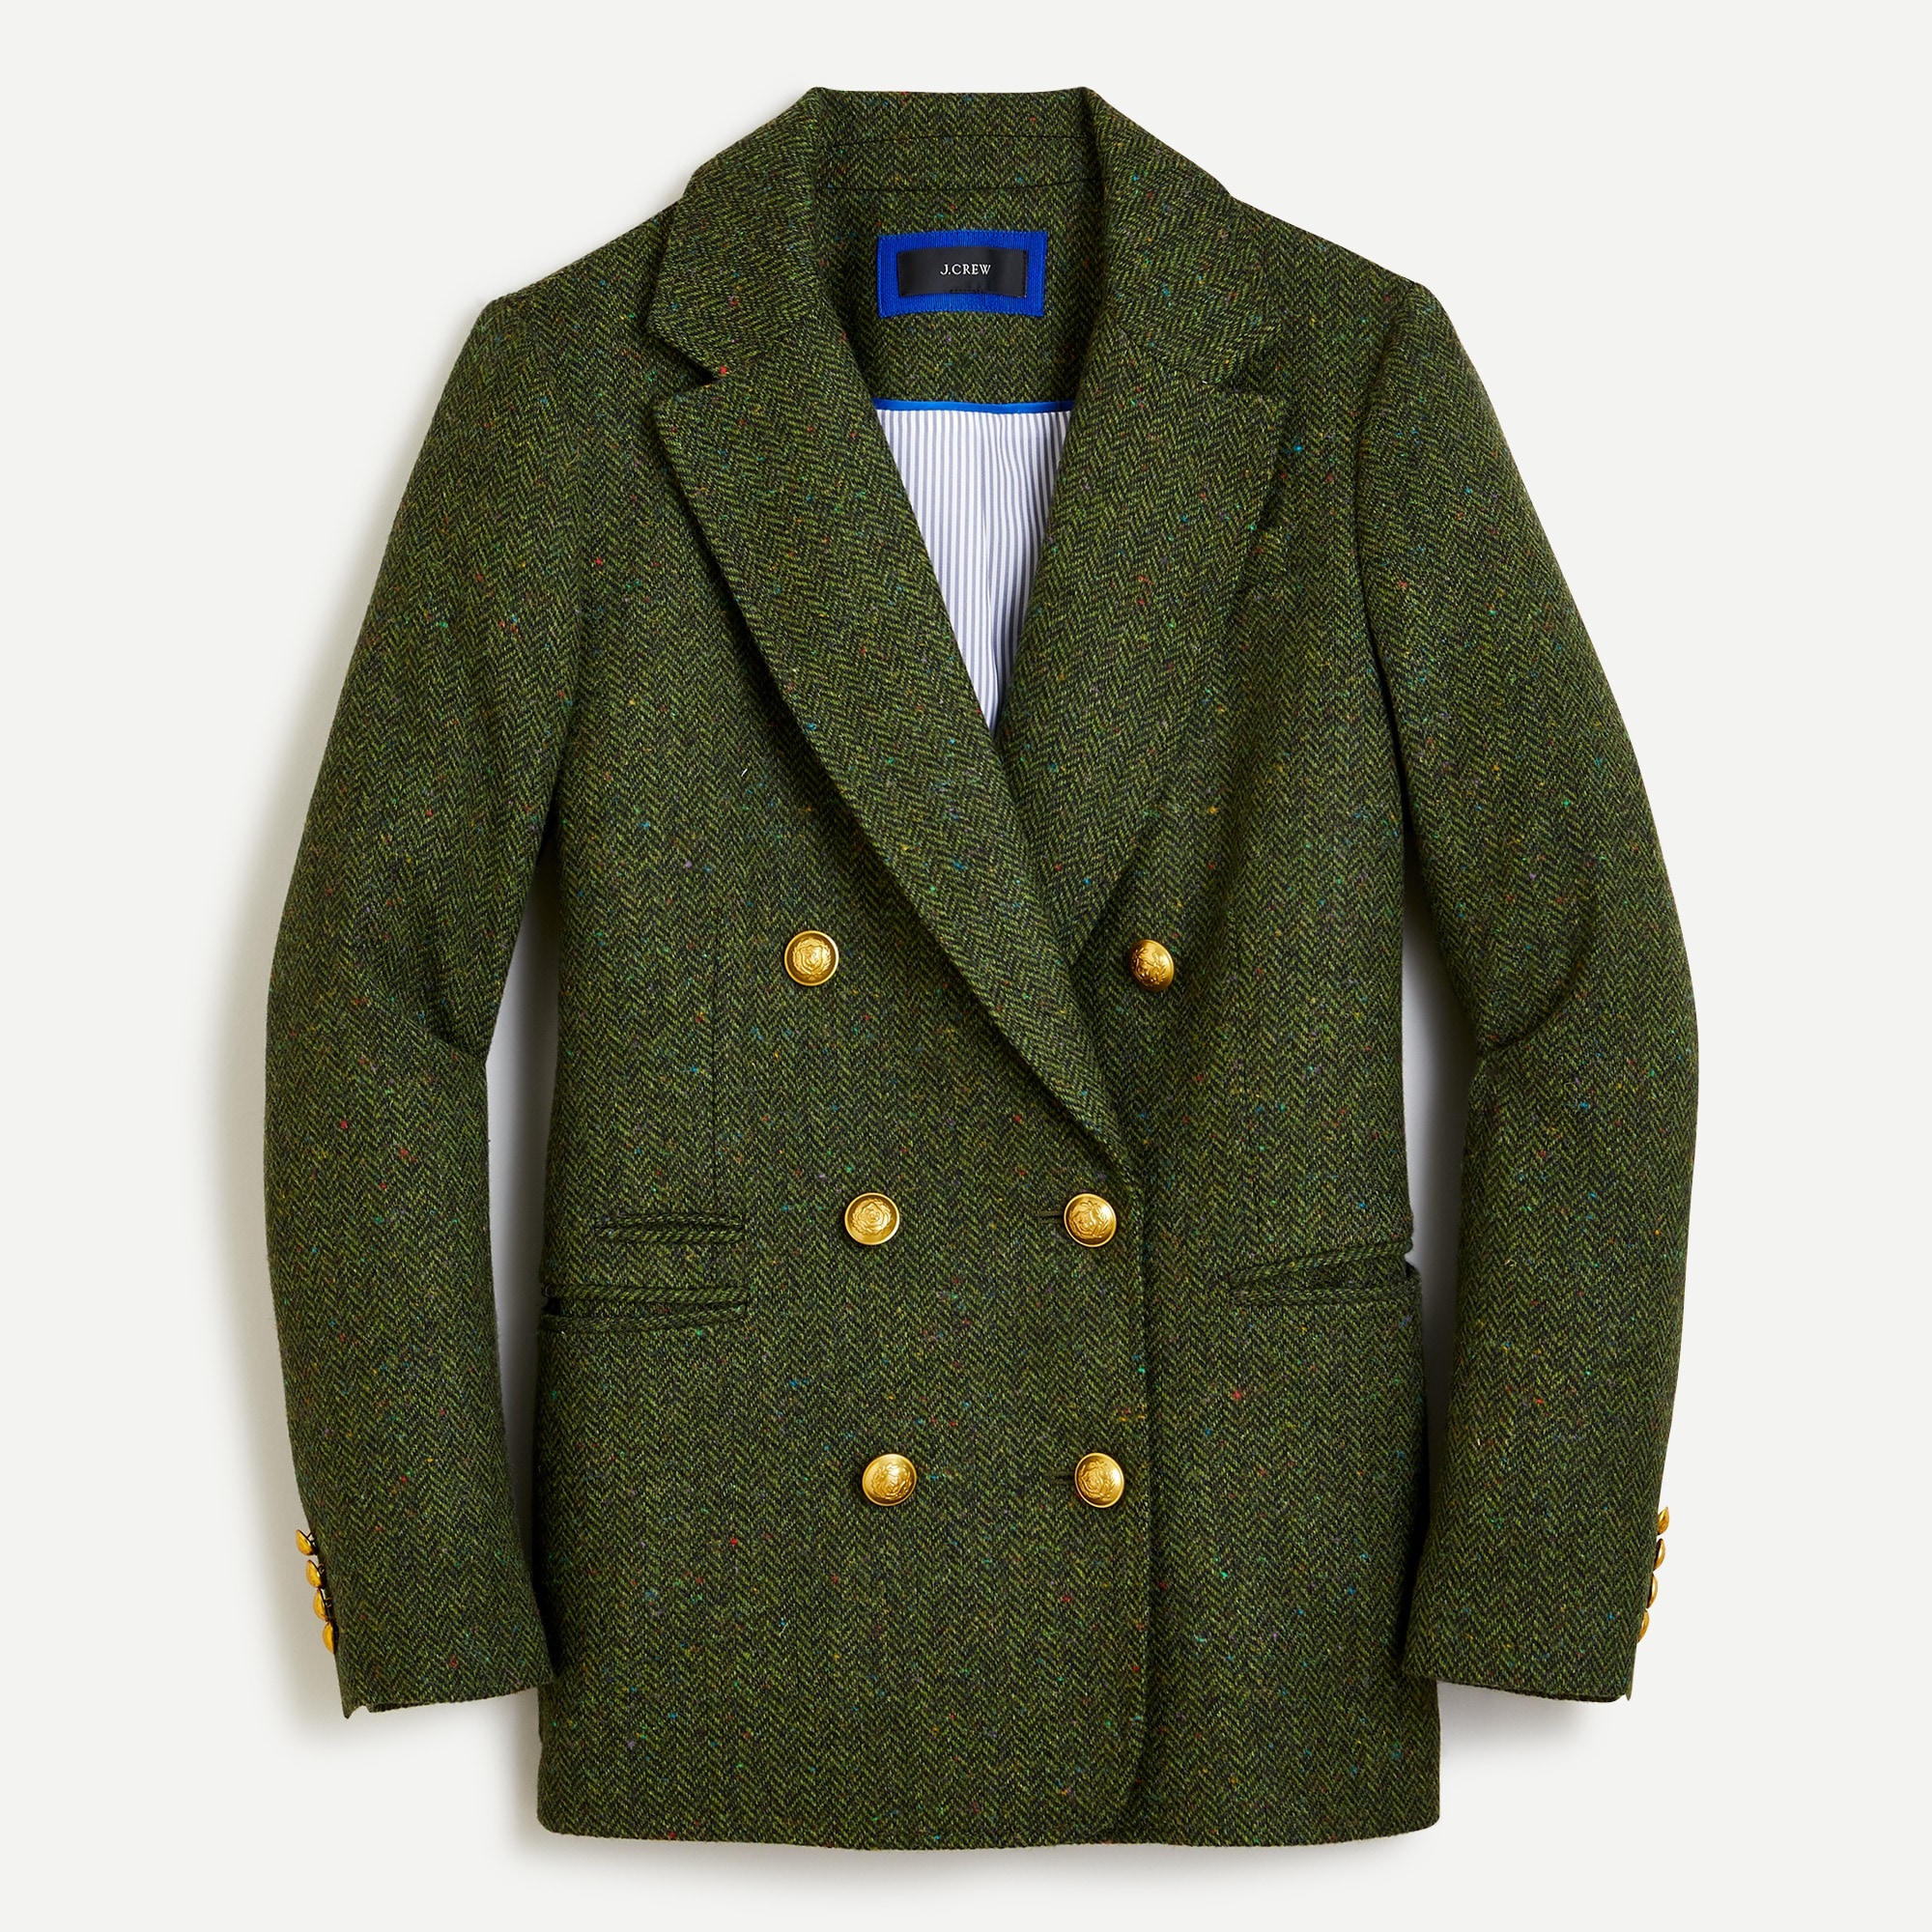 Louisiana Professional Wear Coat: Size 3XL, Olive Dab Green, Neoprene & Nylon | Part #300AHCGR3X